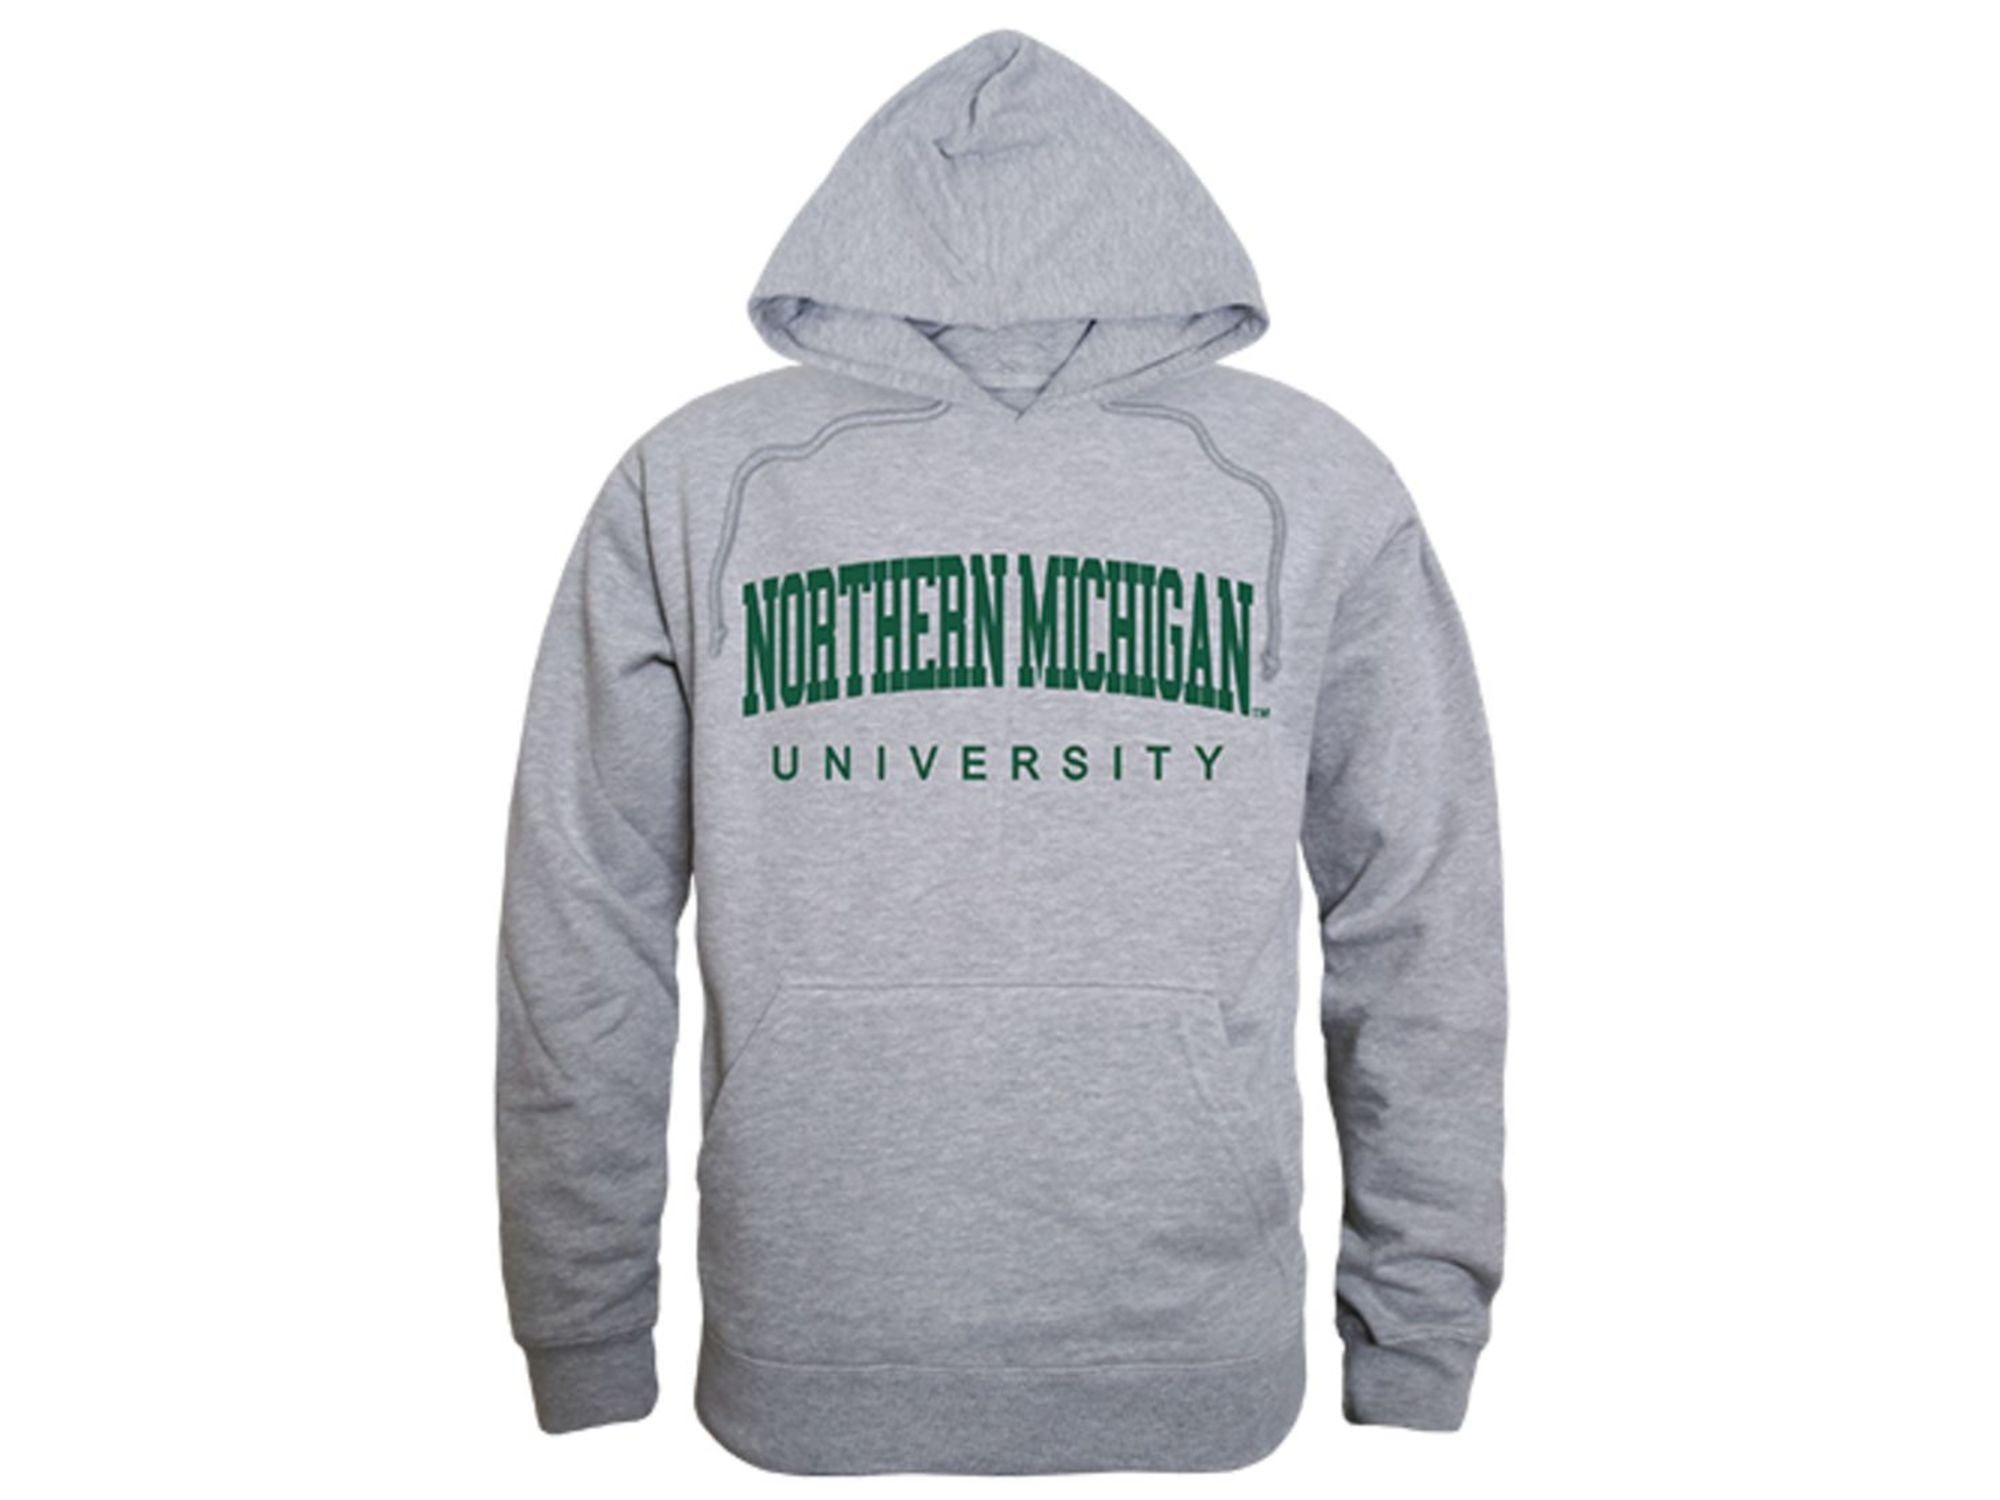 Nmu Northern Michigan University Game Day Hoodie Sweatshirt Heather Grey - Walmartcom